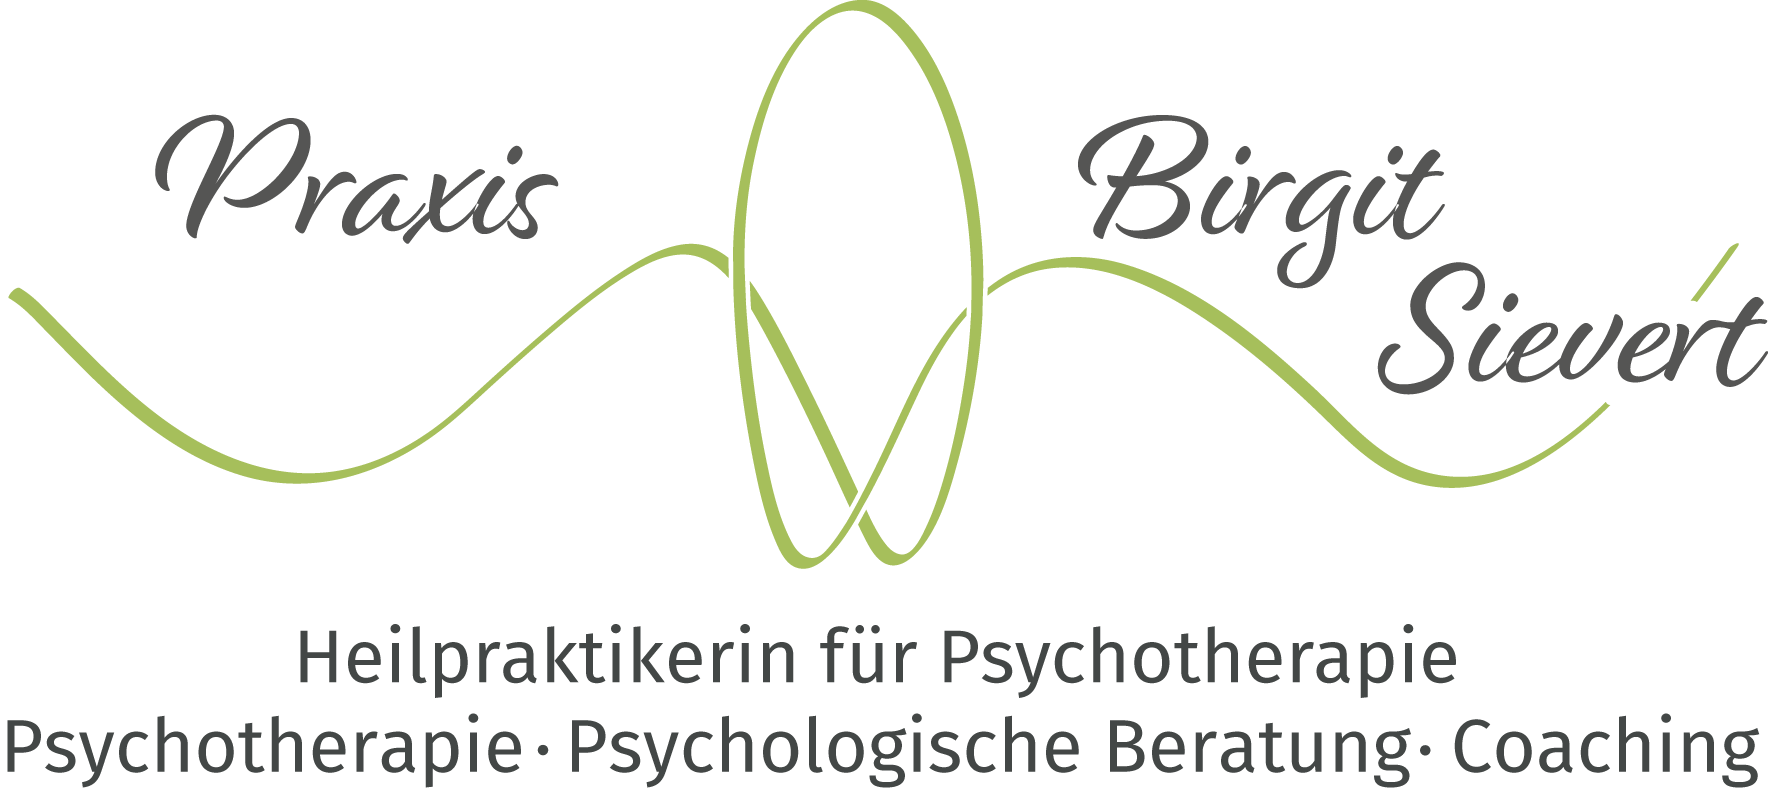 Birgit Sievert Praxis für psychosoziale Anliegen psychologische Beratung